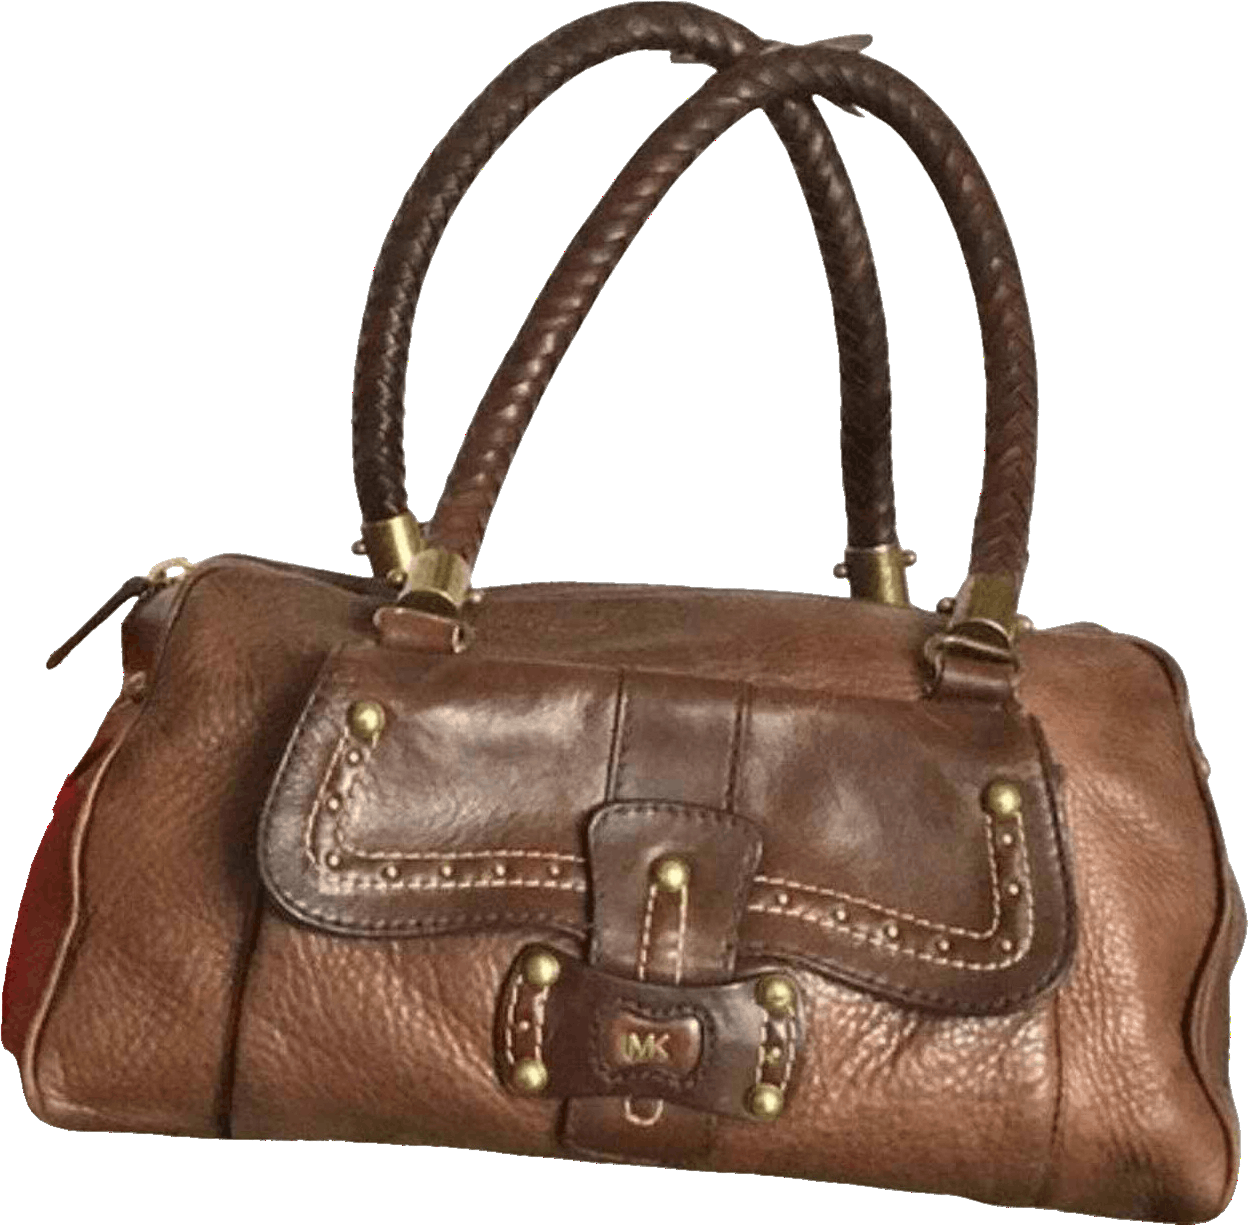 Buy Genuine, Handcrafted Leather Handbags For Women Online - Hidesign